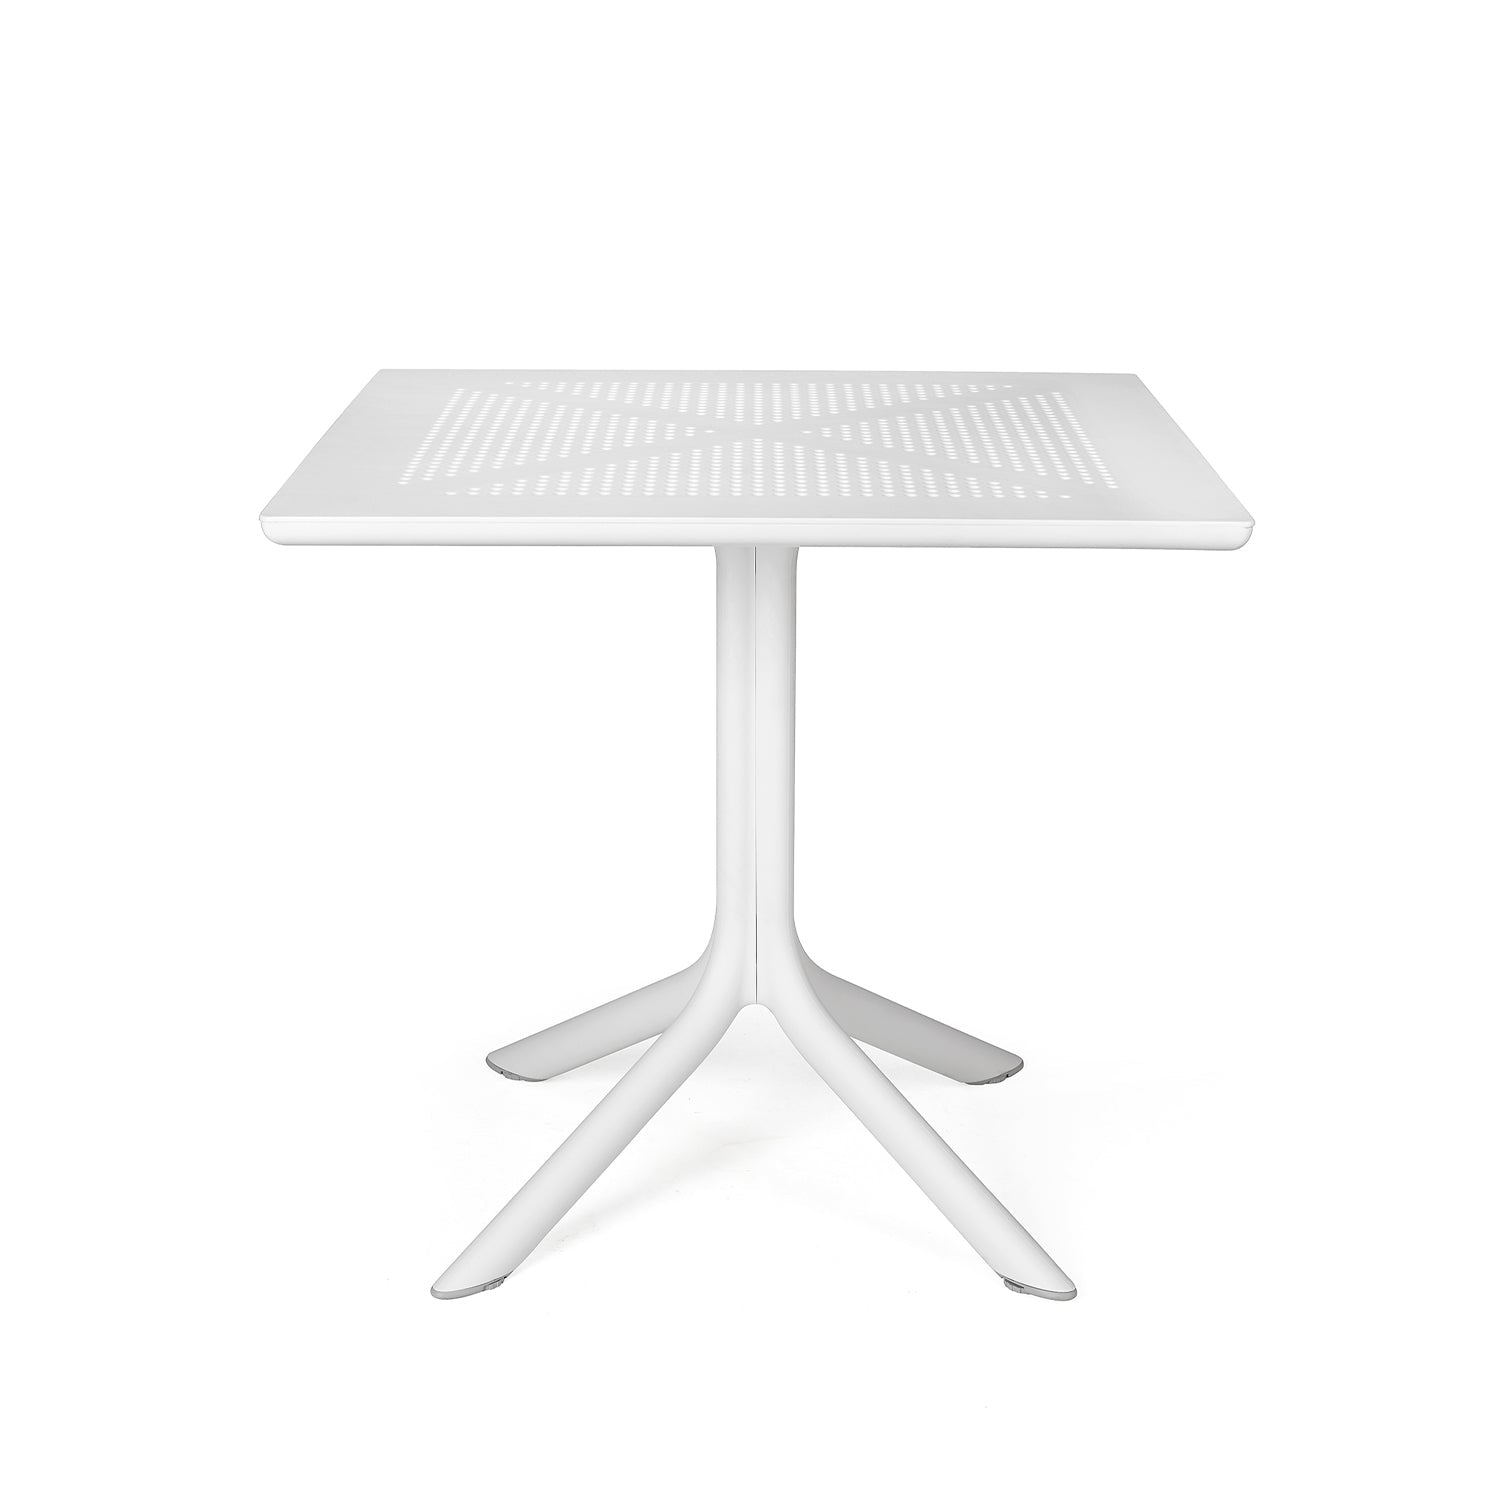 Clip 80cm Garden Table In White